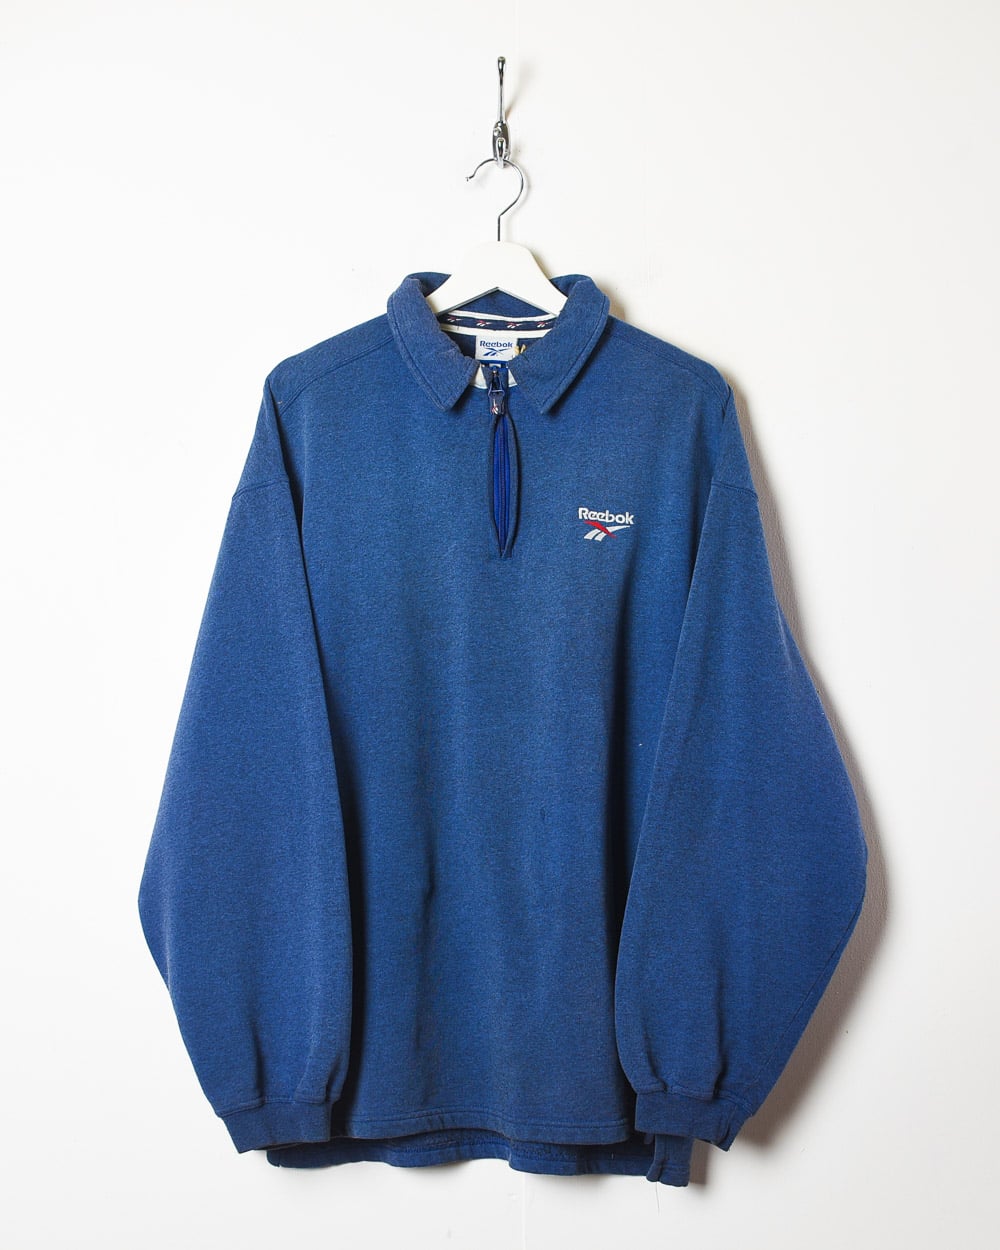 Blue Reebok 1/4 Zip Collared Sweatshirt - XX-Large